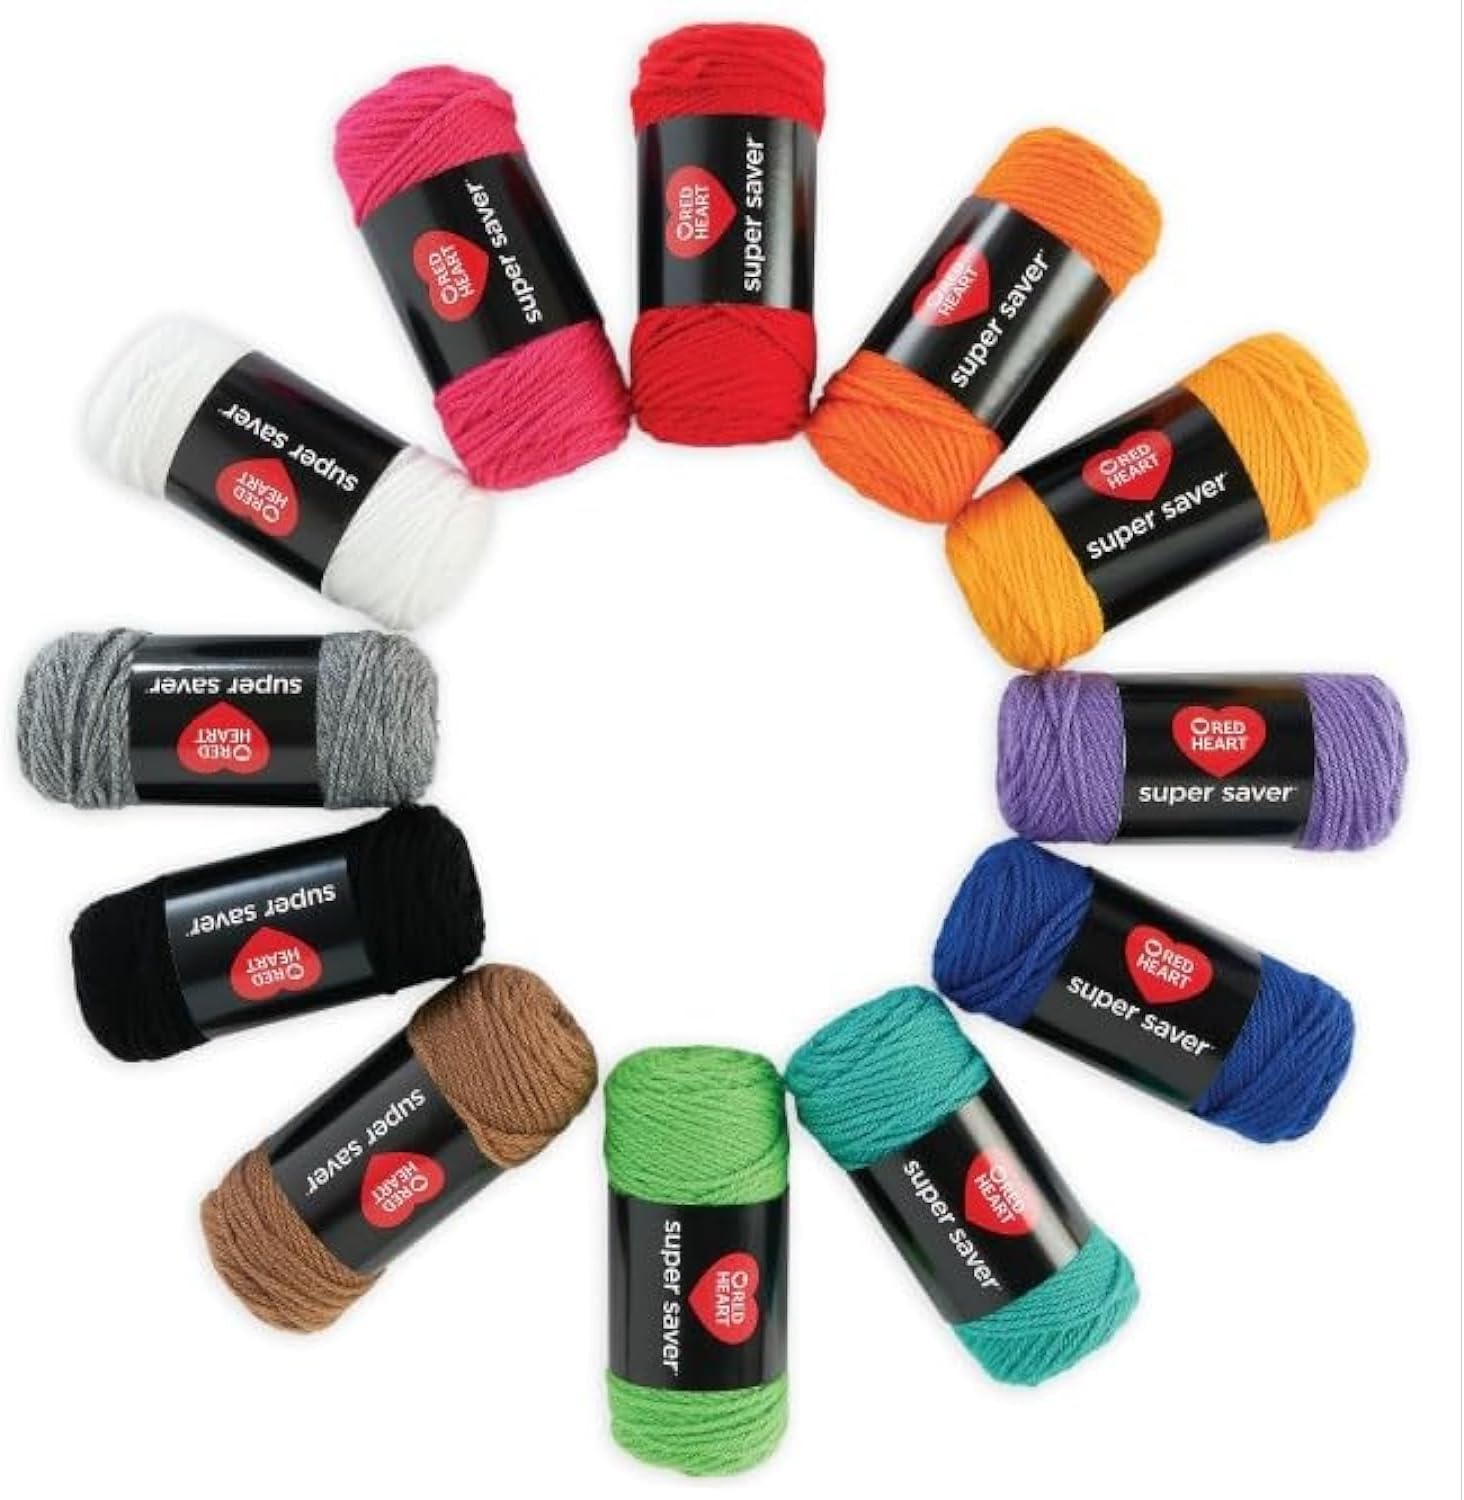 Red Heart Super Saver Super Yarn Craft Kit for Crochet